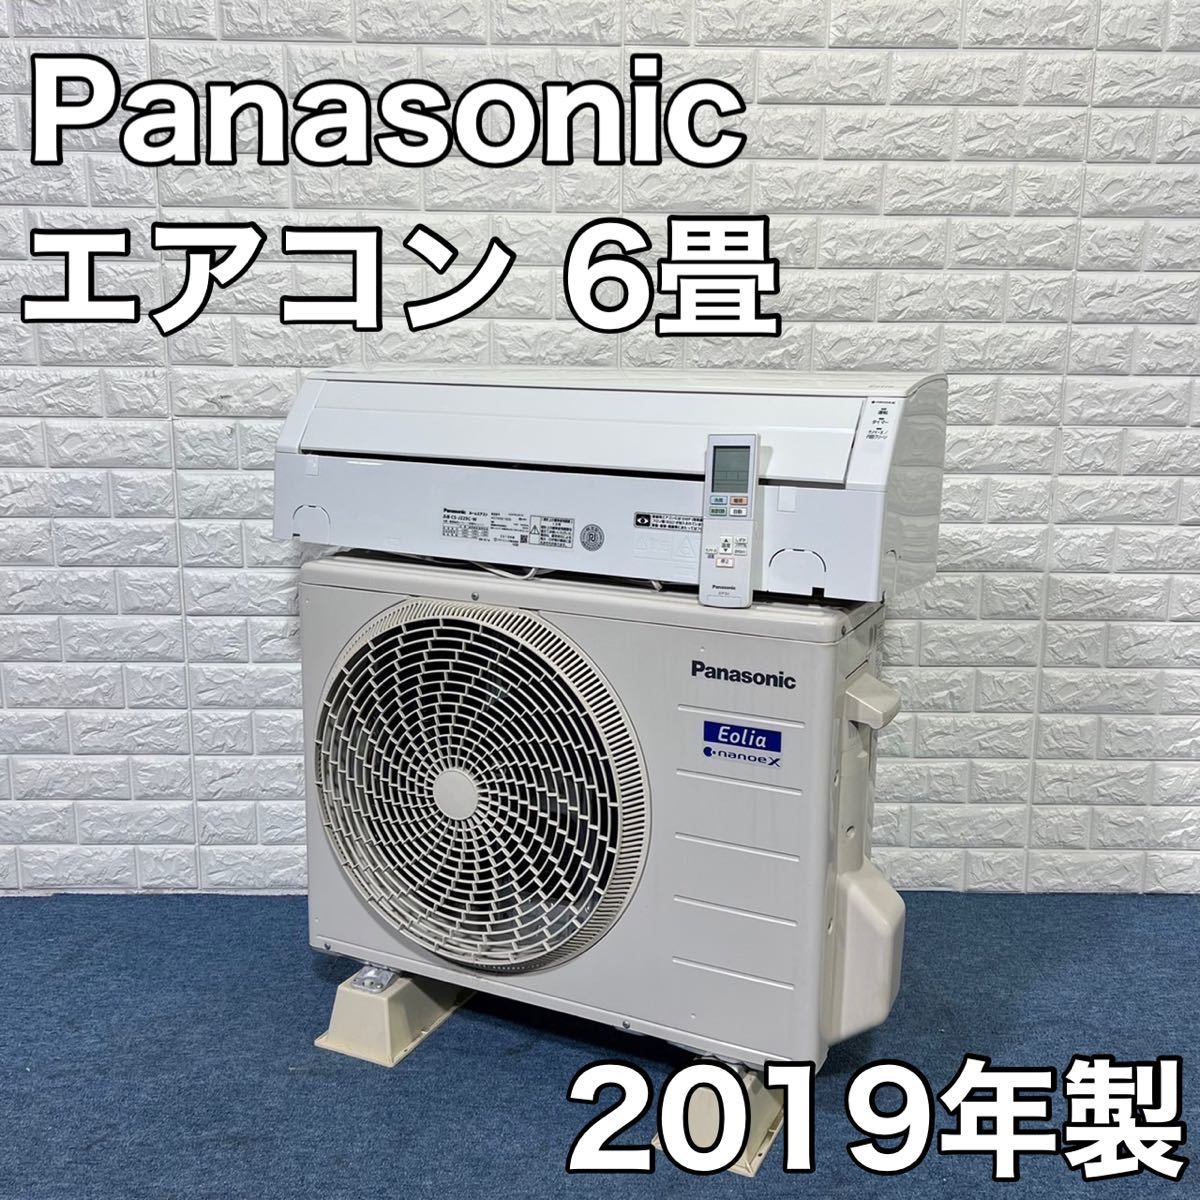 Panasonic ルームエアコン CS-J229C-W 6畳用 2019年製 ナノイーX 家電